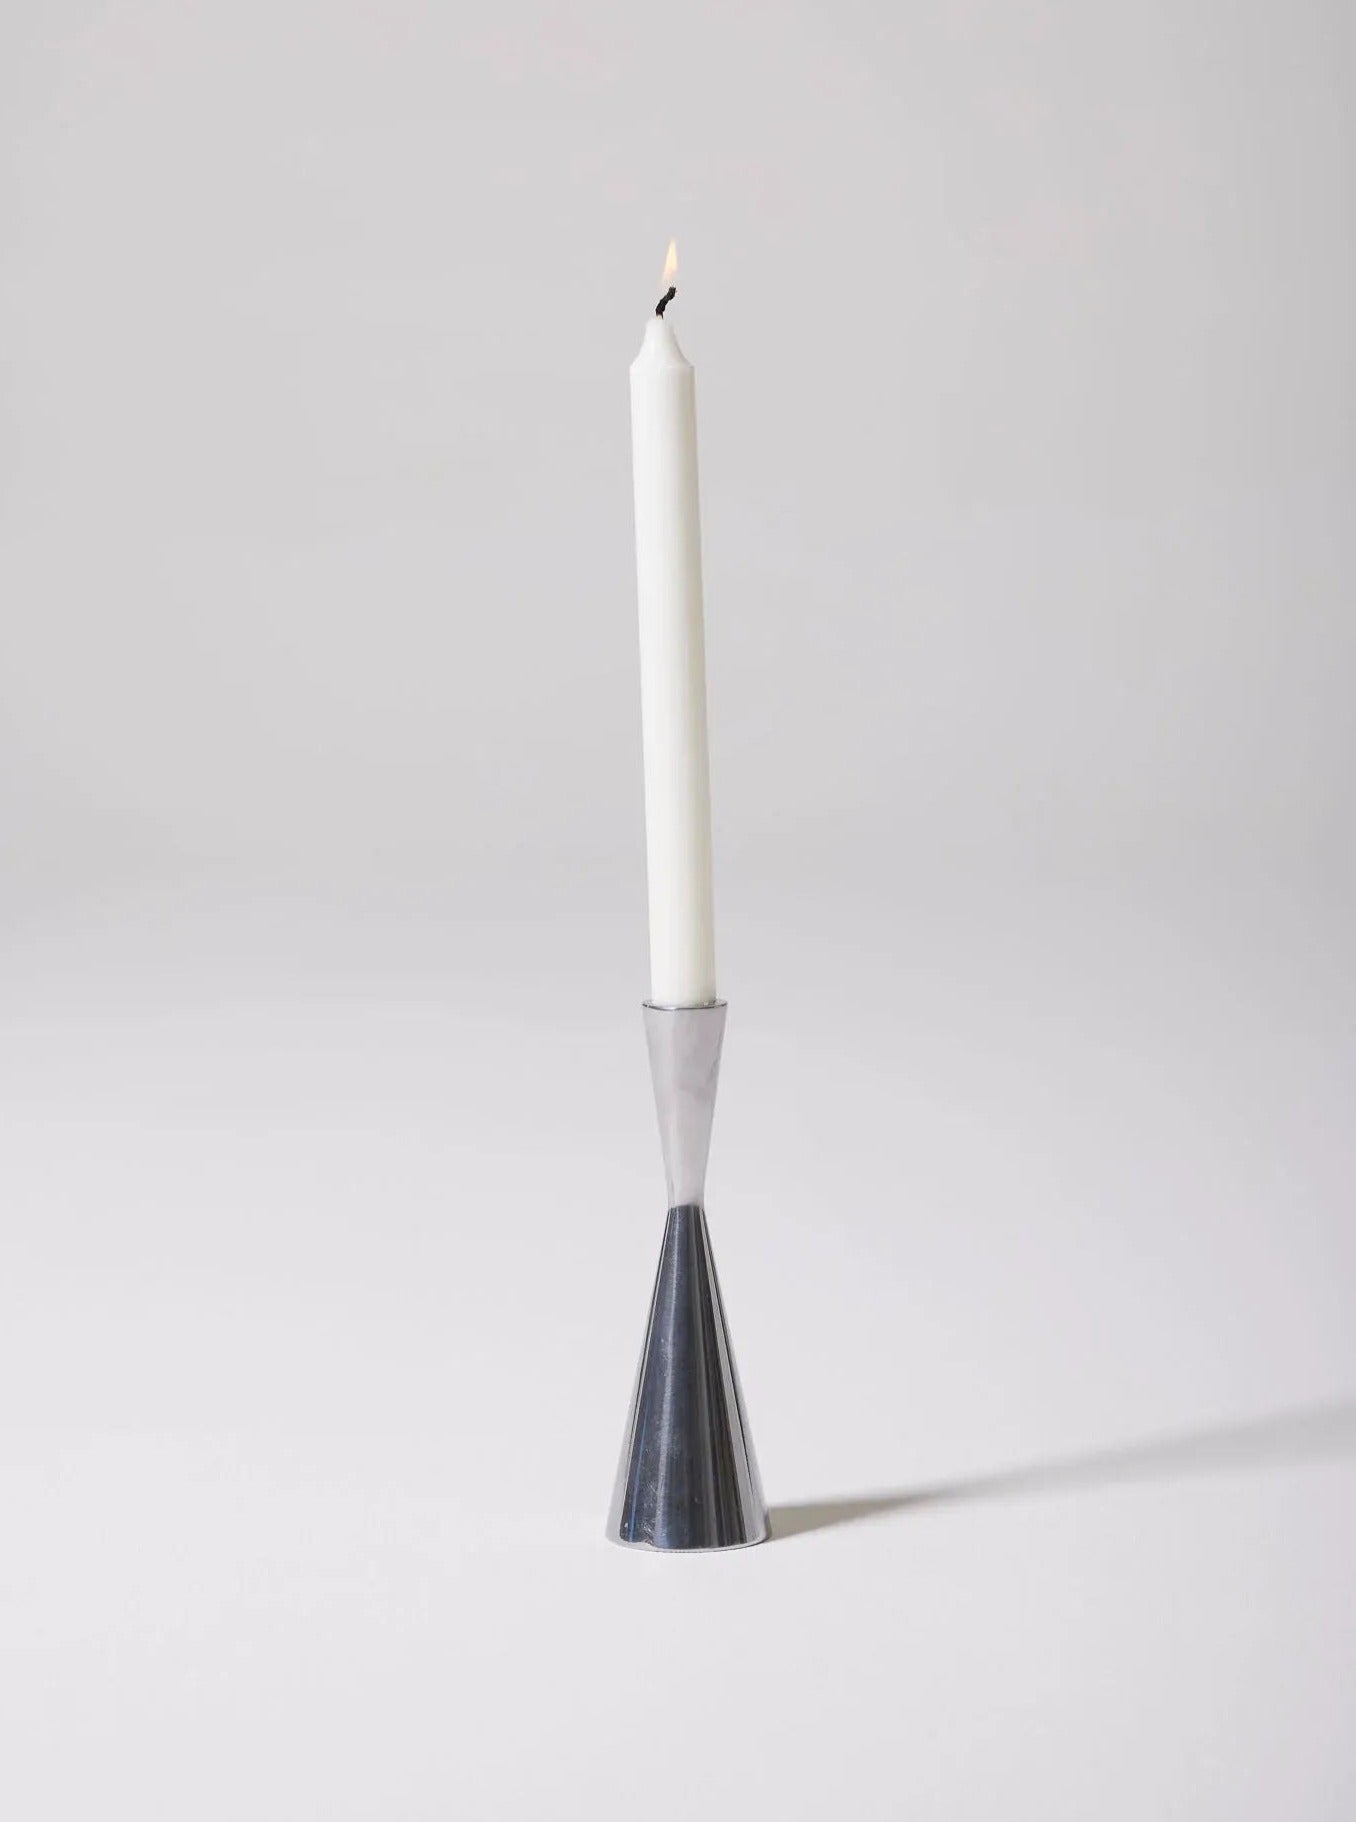 Candleholder by Erika Pekkari